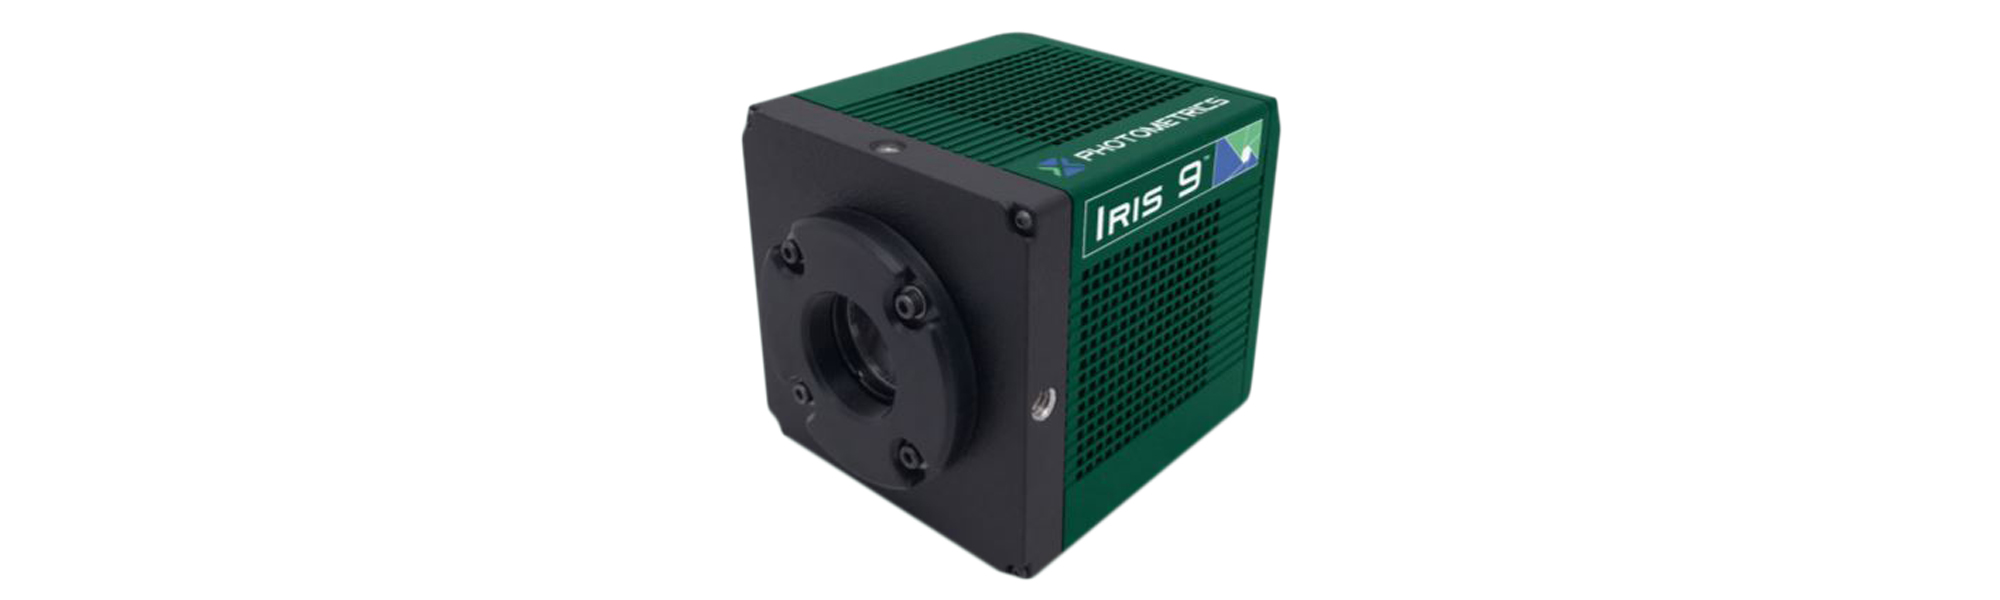 Photometrics Iris 9™ Scientific CMOS Camera